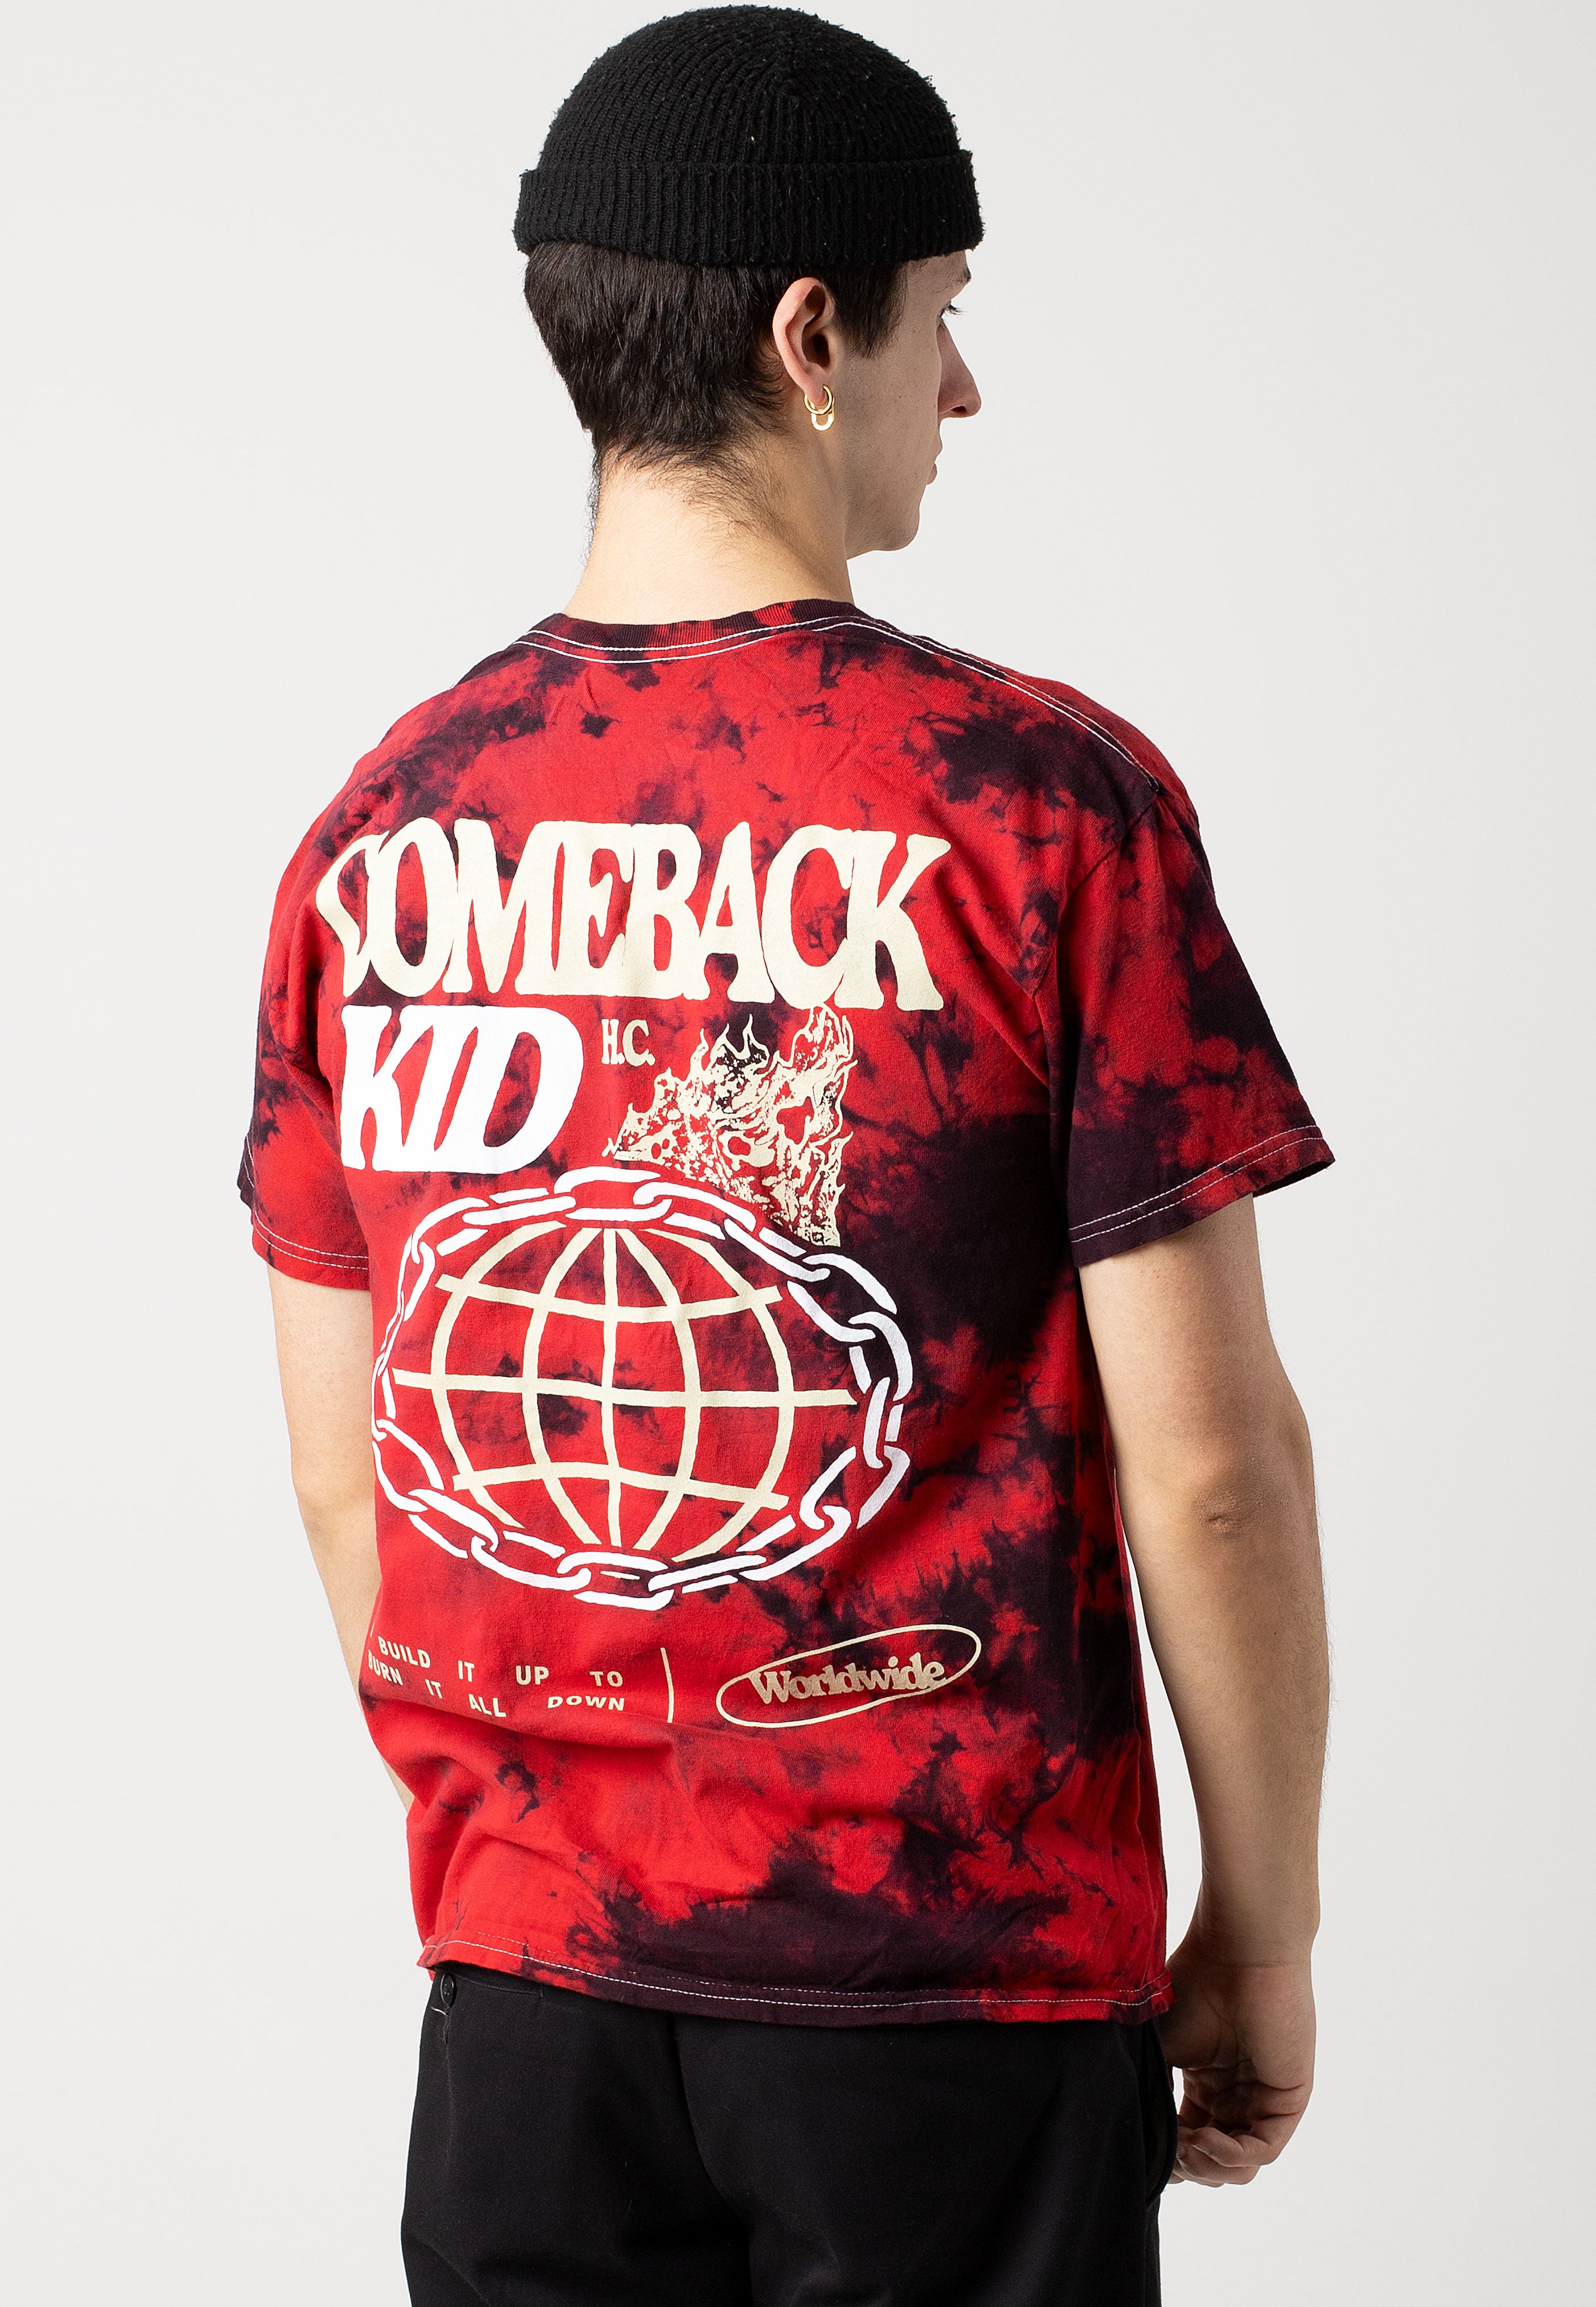 Comeback Kid - Worldwide Red/Black Tie Dye - T-Shirt